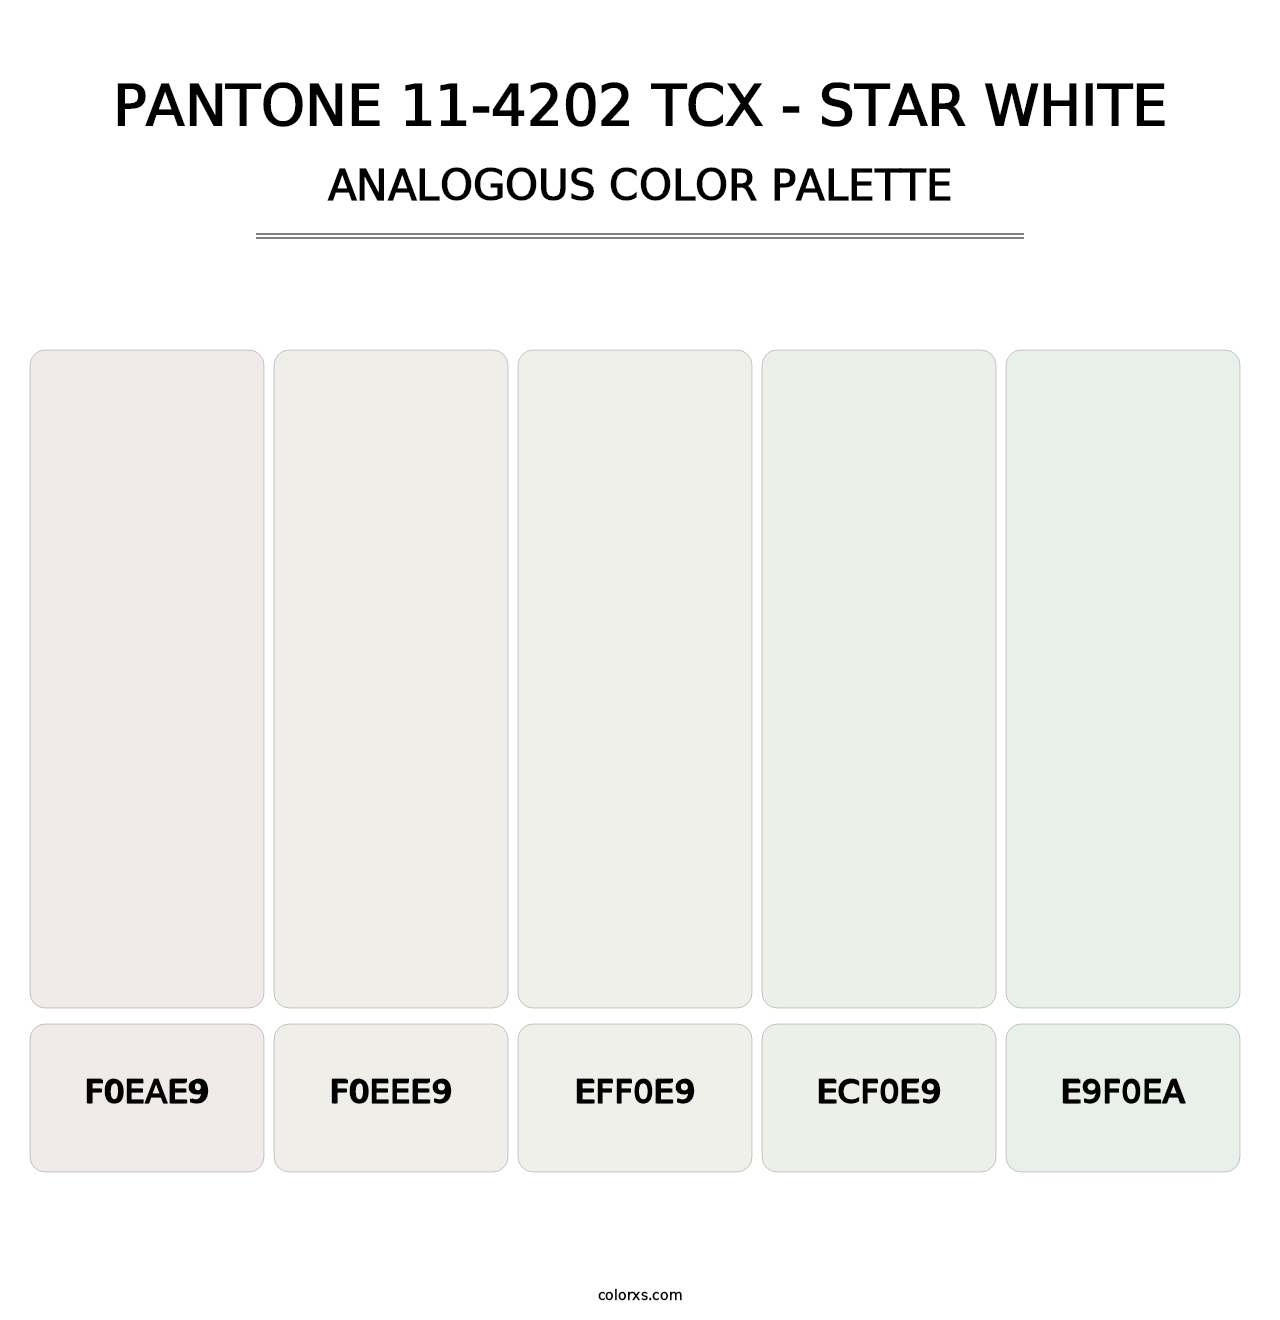 PANTONE 11-4202 TCX - Star White - Analogous Color Palette